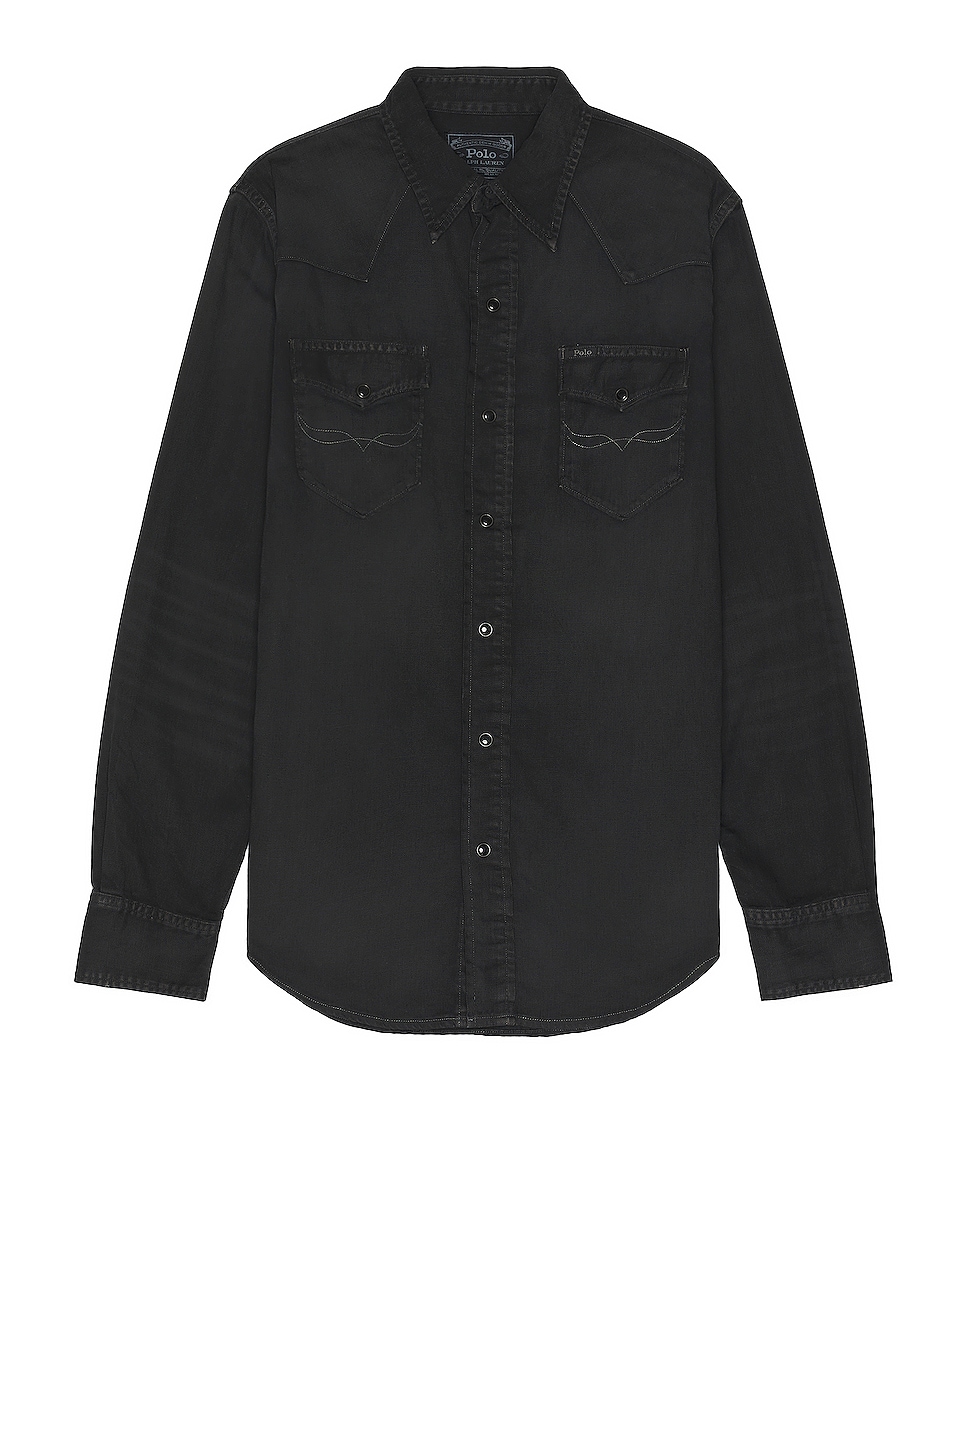 Image 1 of Polo Ralph Lauren Western Denim Shirt in Polo Black